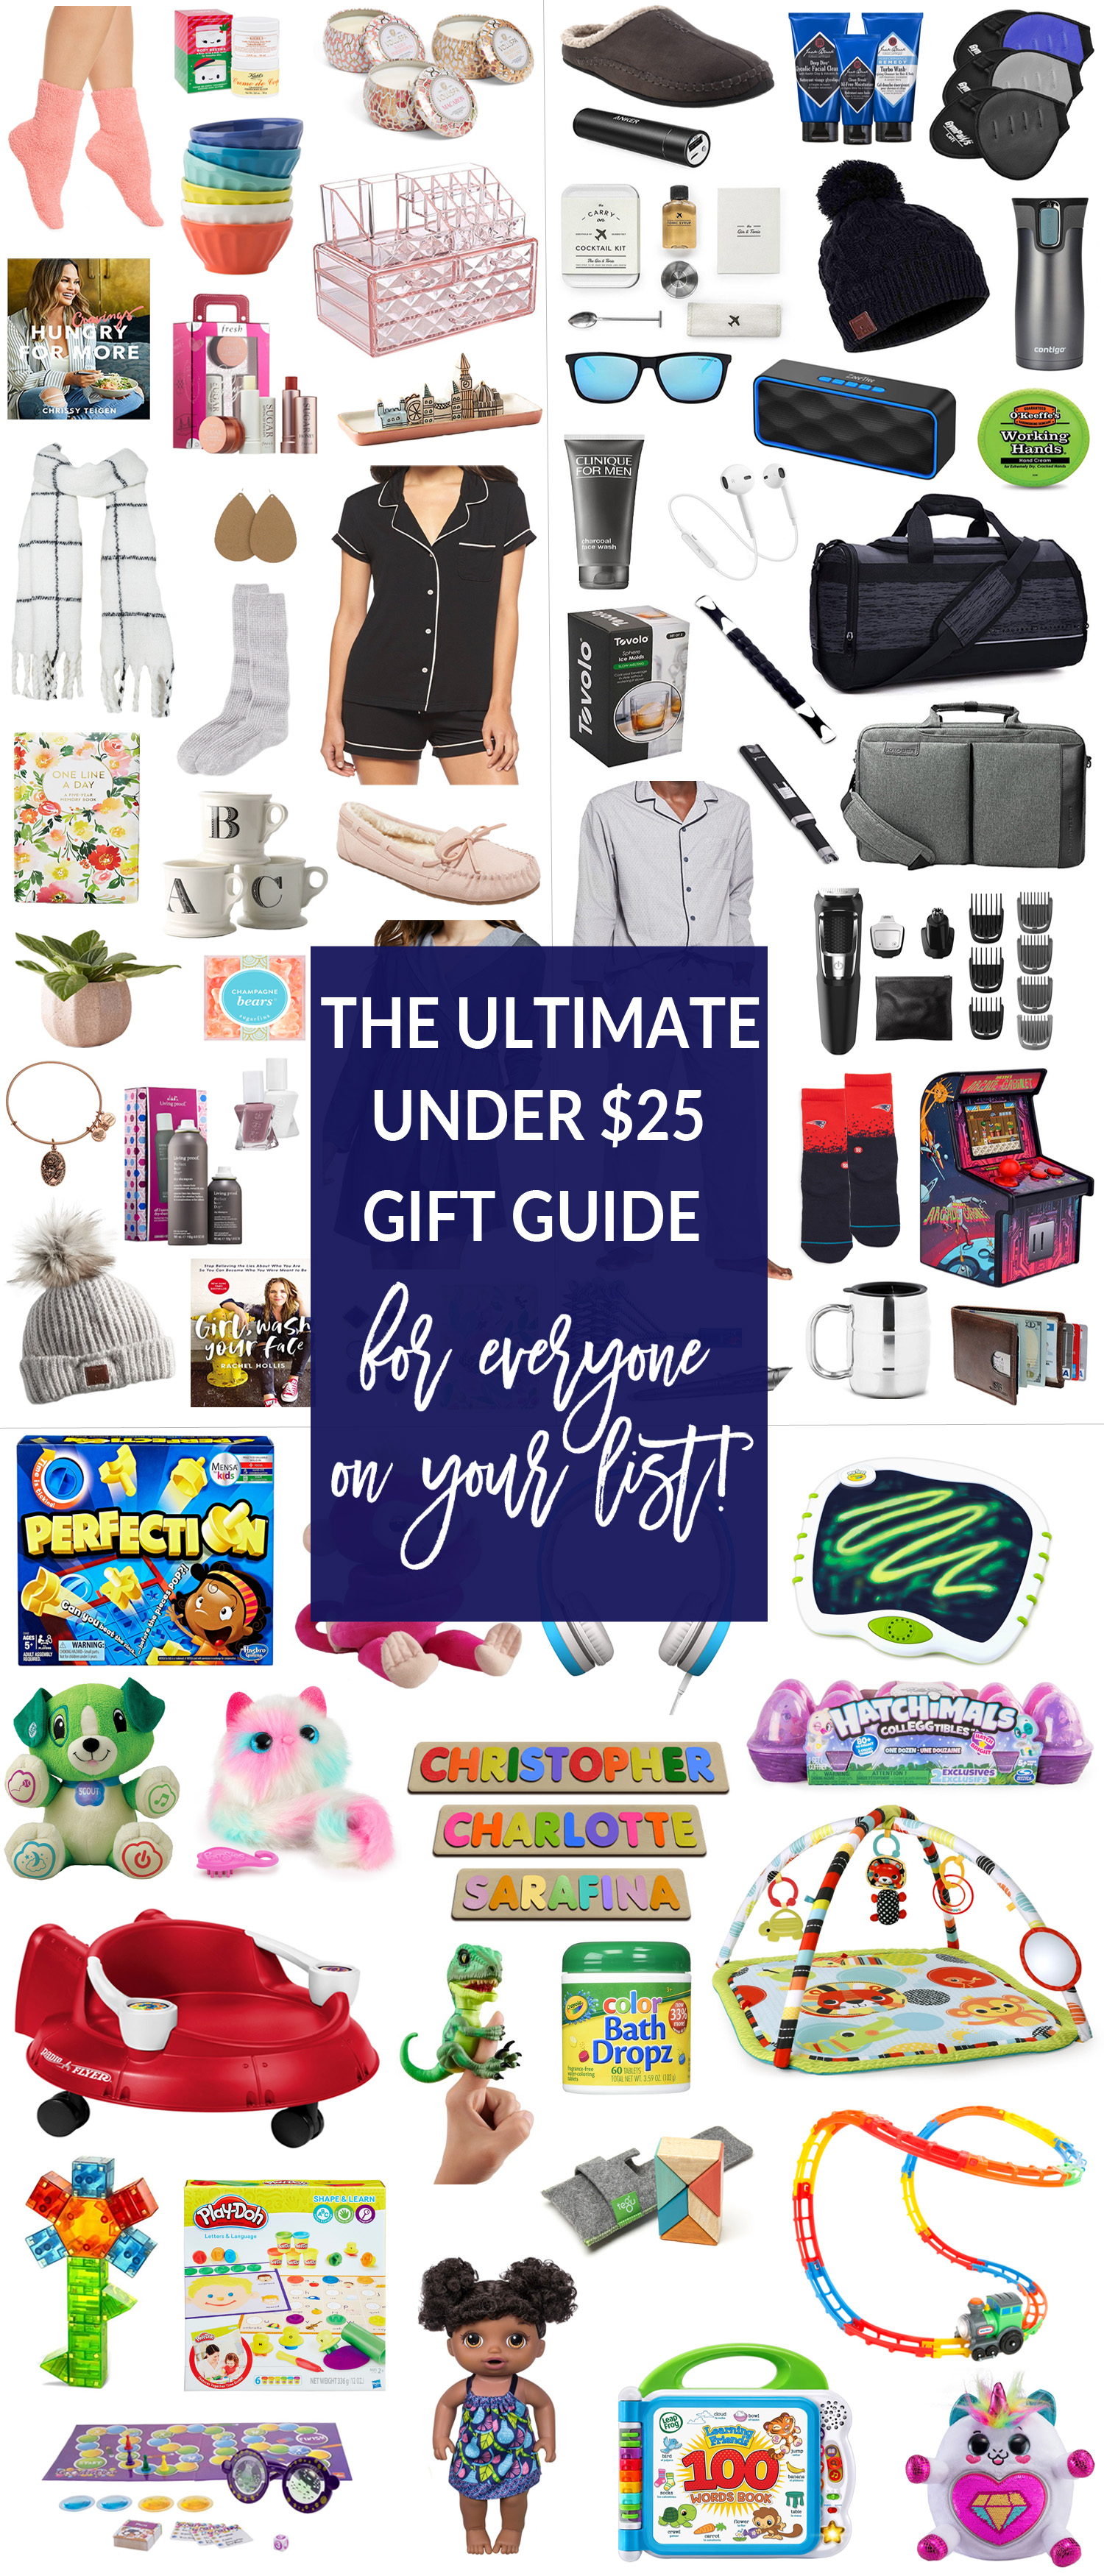 https://www.sandyalamode.com/wp-content/uploads/2018/11/The-Ultimate-Under-25-Gift-Guide-Sandy-a-la-Mode.jpg